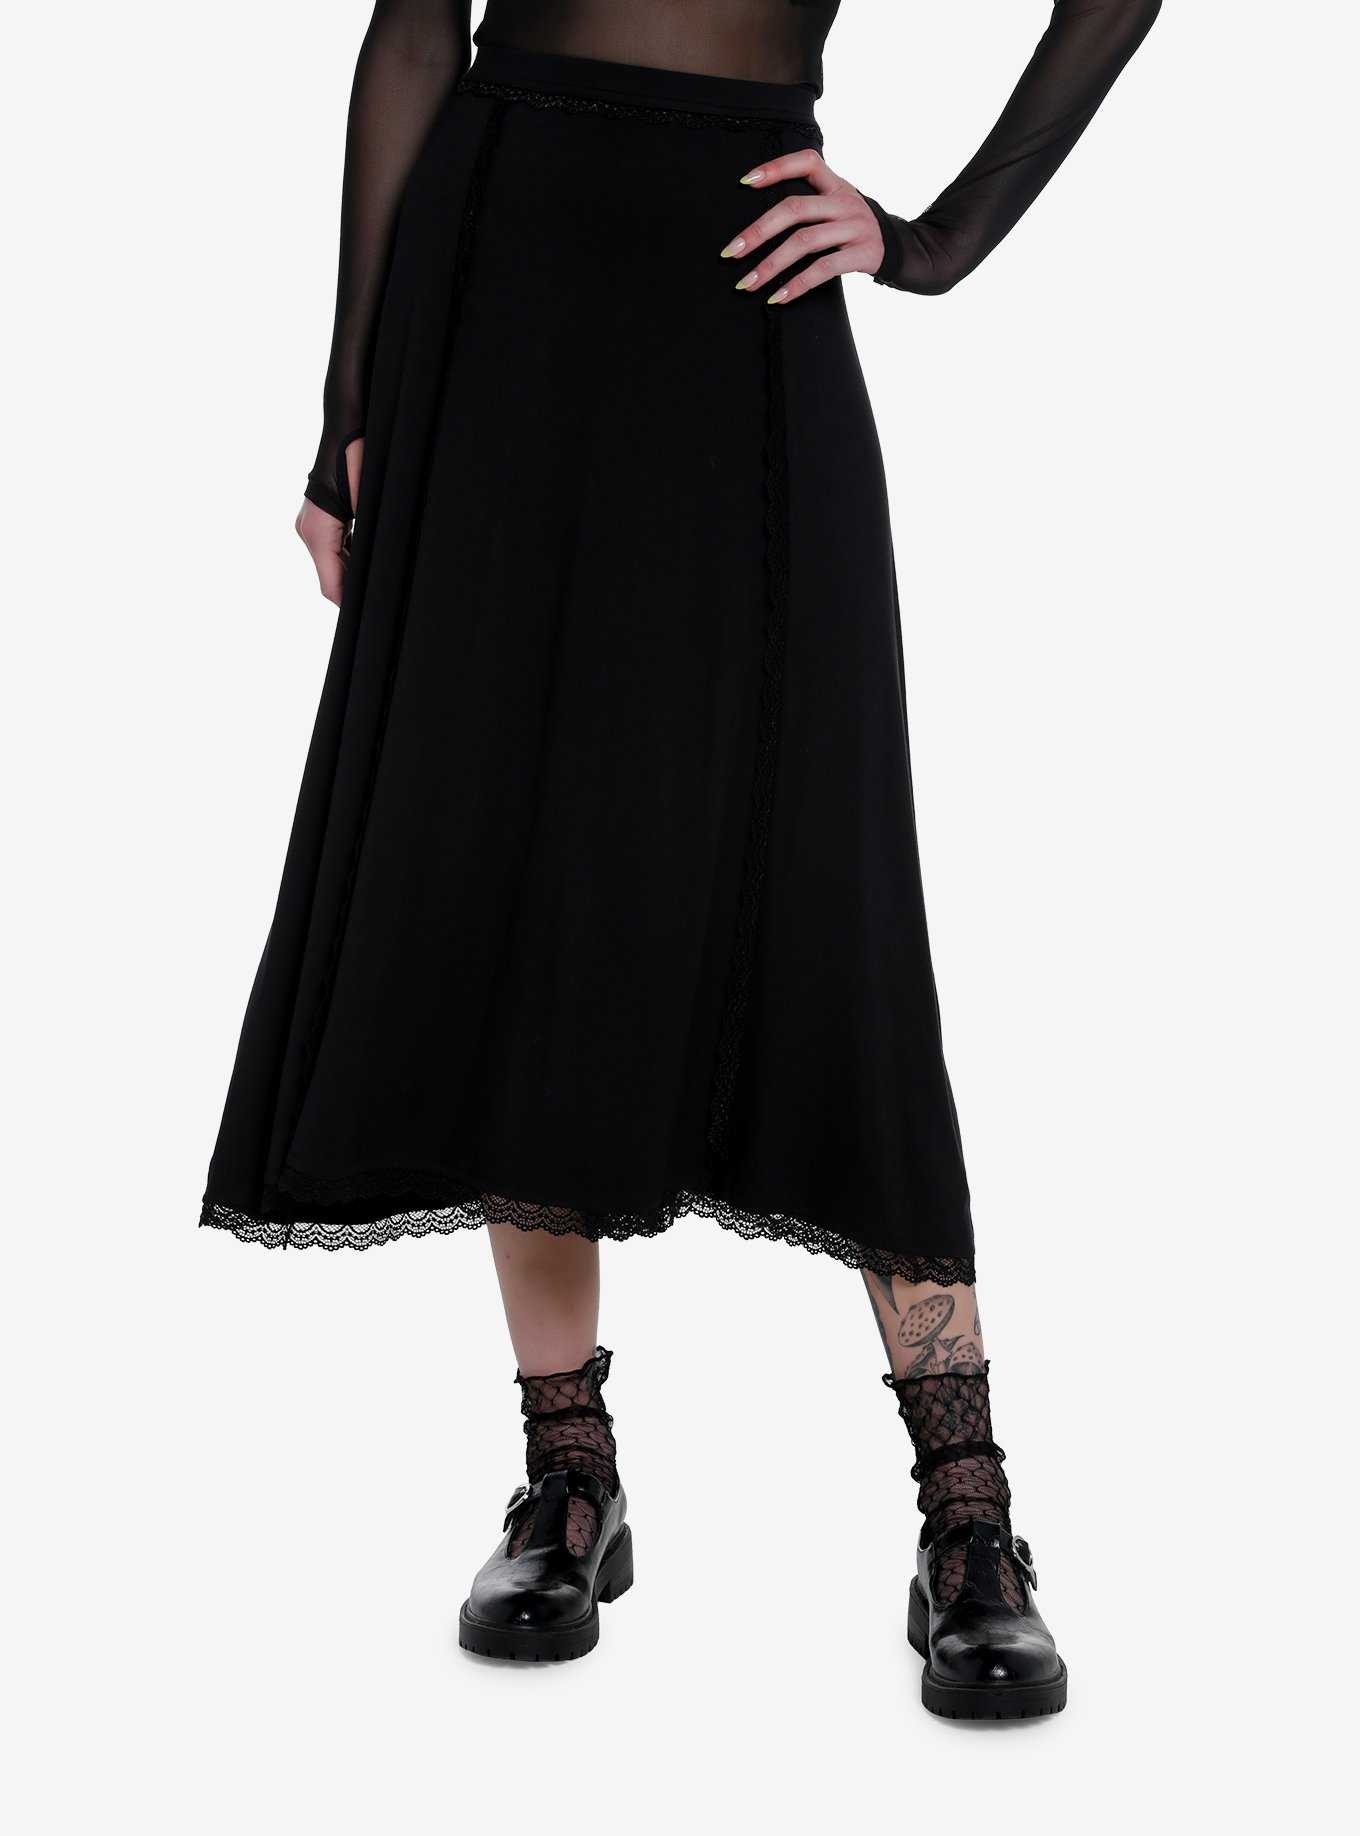 MRULIC dresses for women 2022 Womens 2 Piece Outfits Set Cami Crop Tops  Cute Ruffle Shorts Tracksuit Clubwear Women's Skirt Suit Black + L